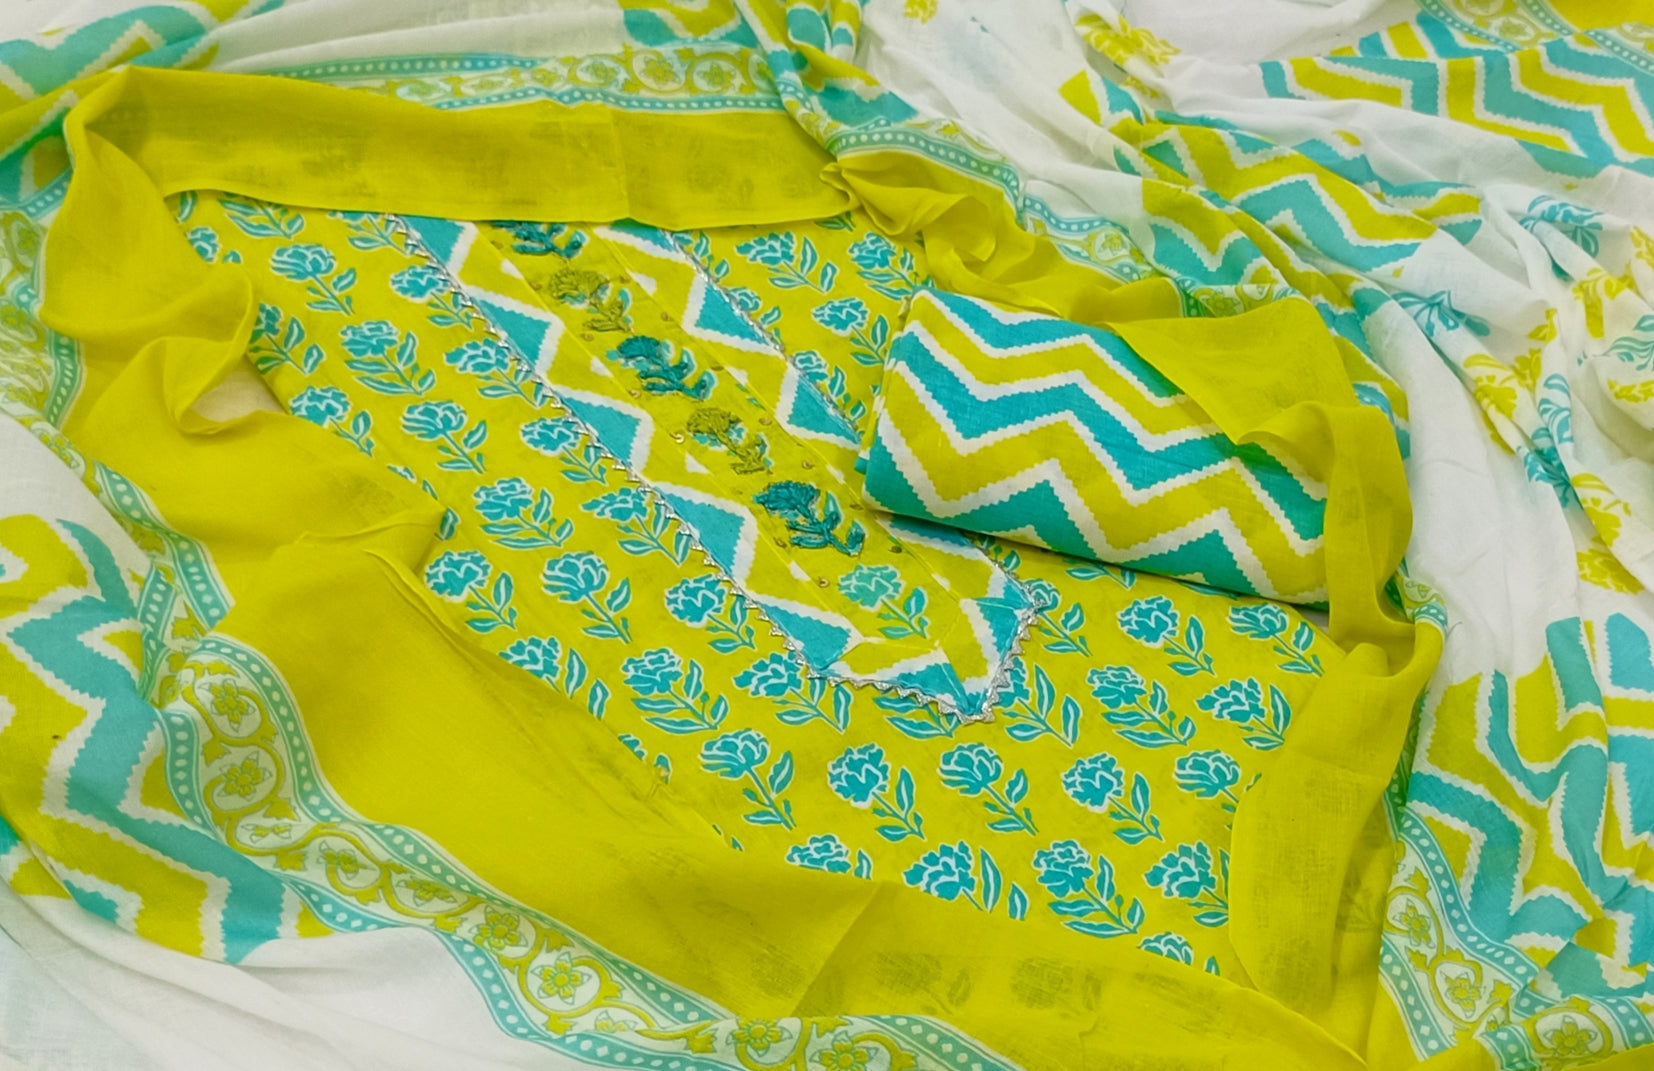 Blue & Yellow Chevron Unstitch Dress Material with Dupatta